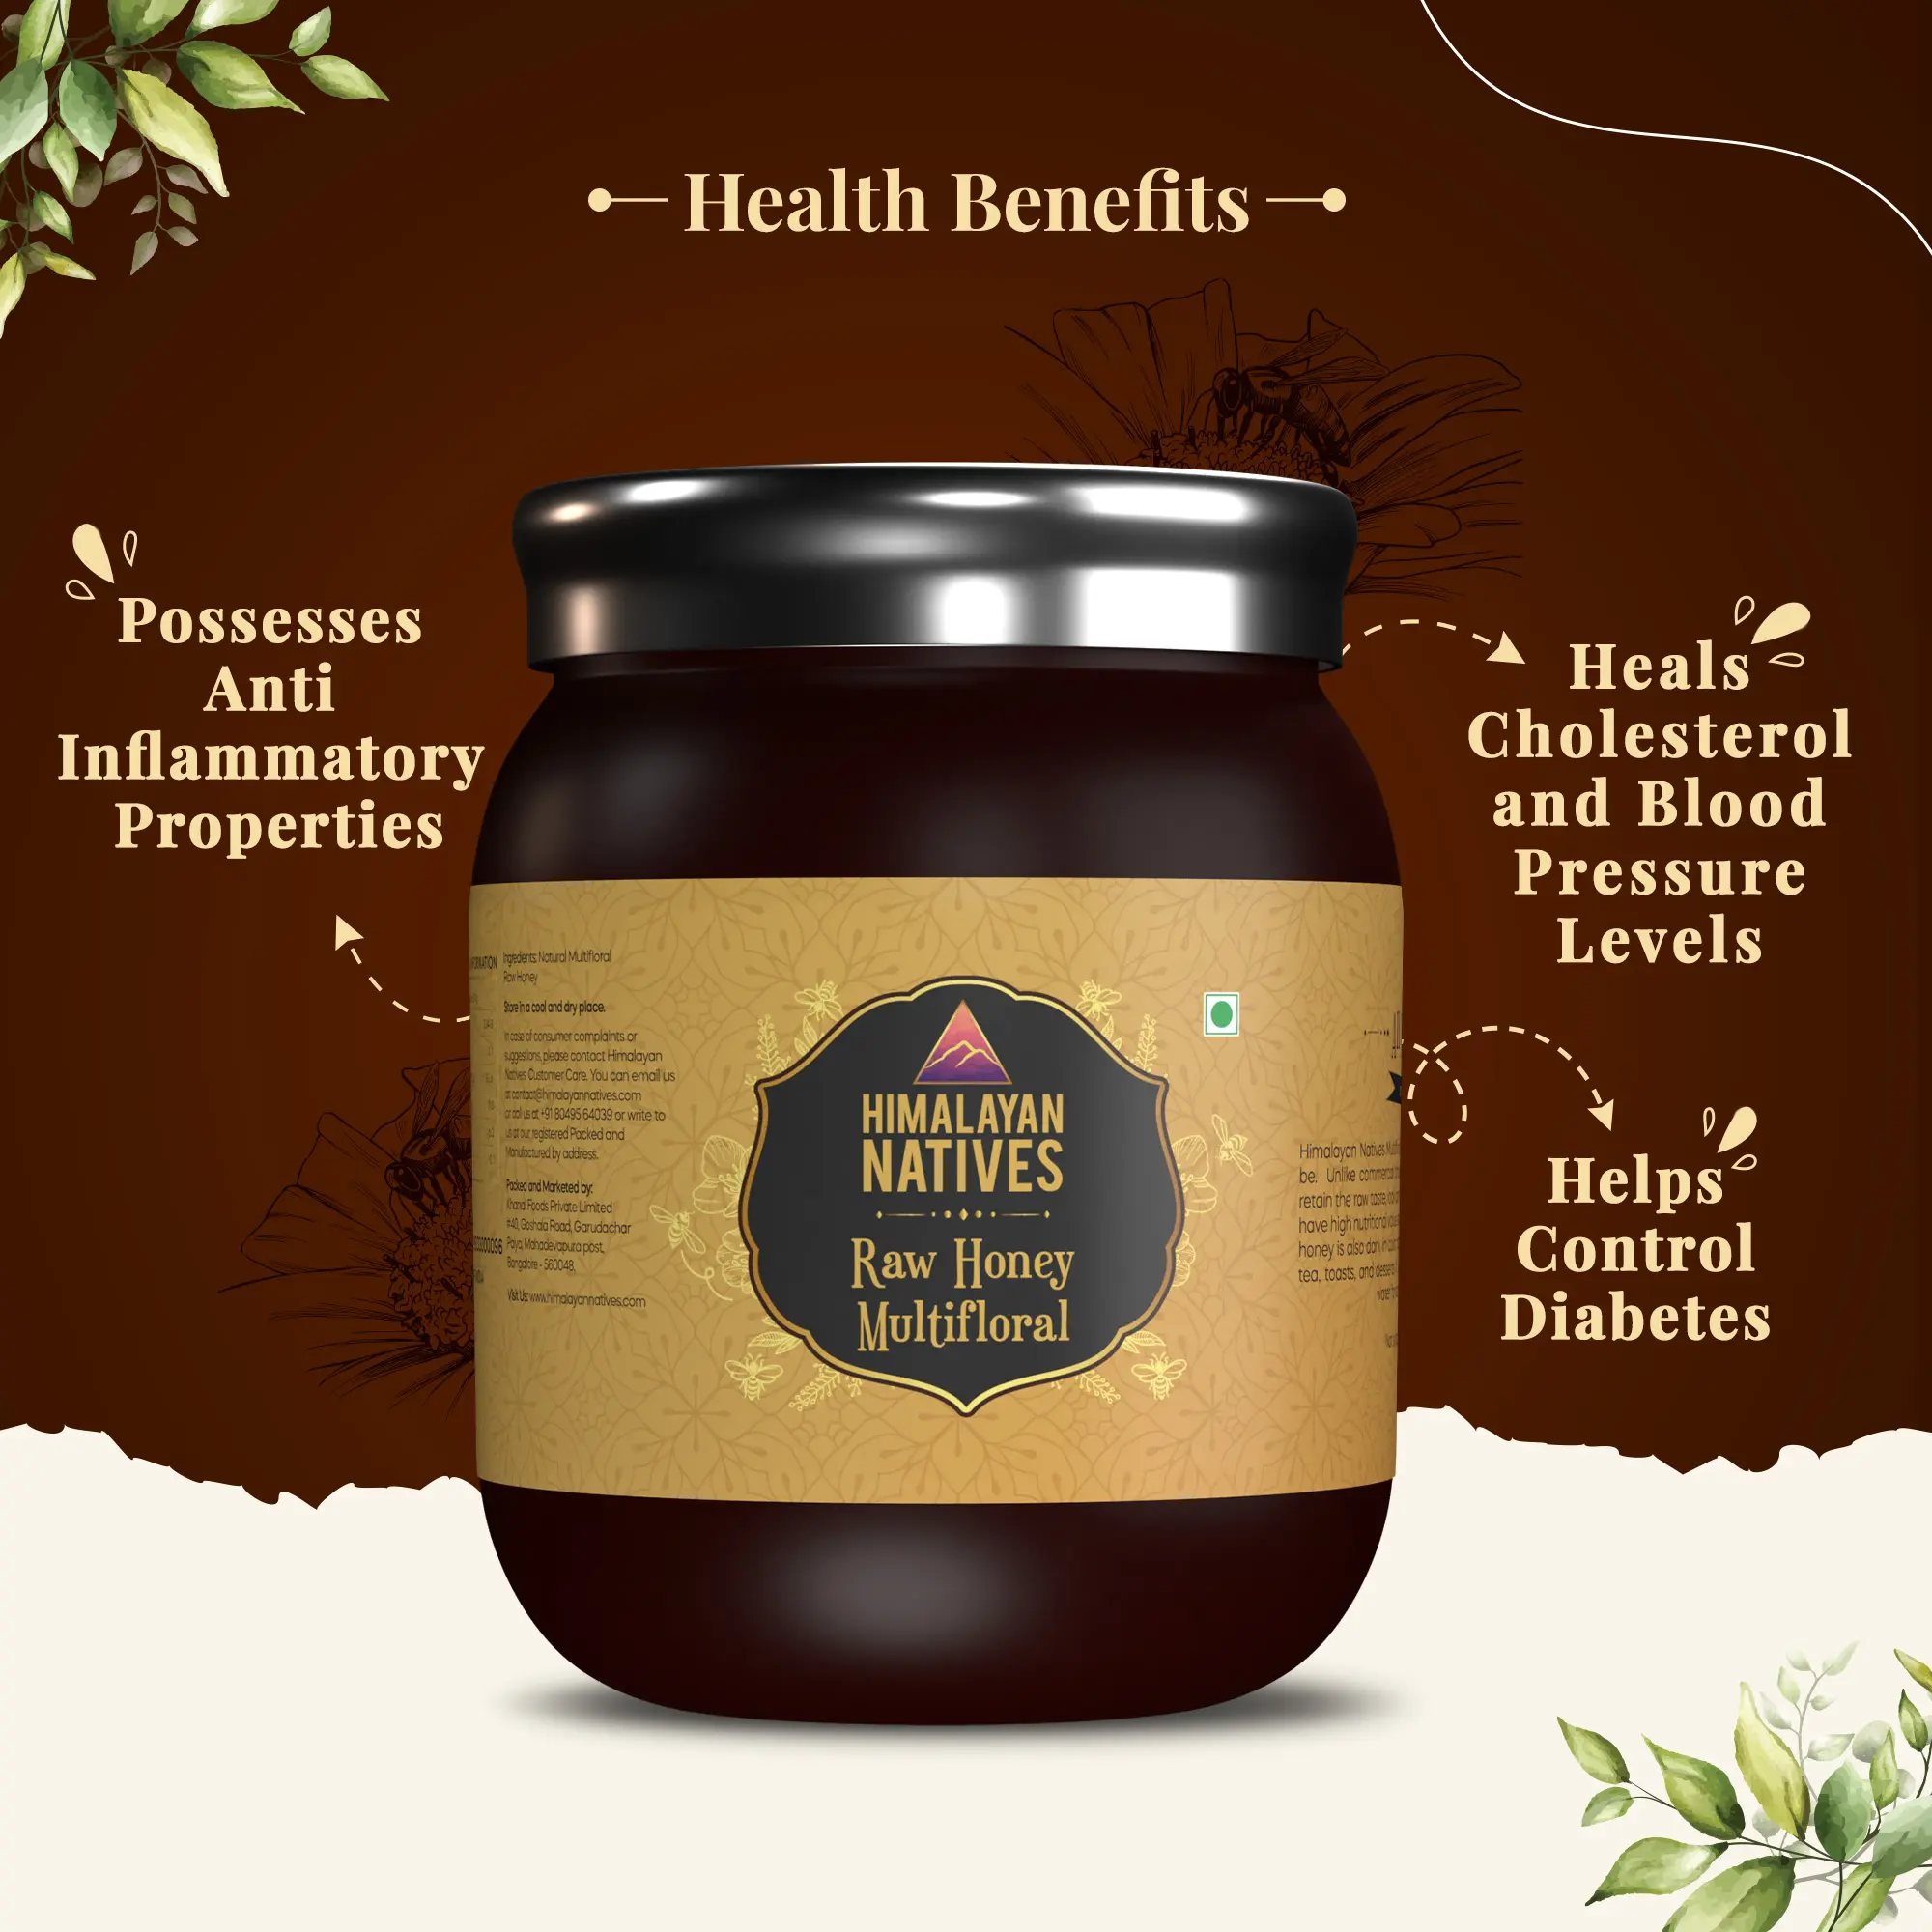 Health Benefits - Multifloral Raw Honey